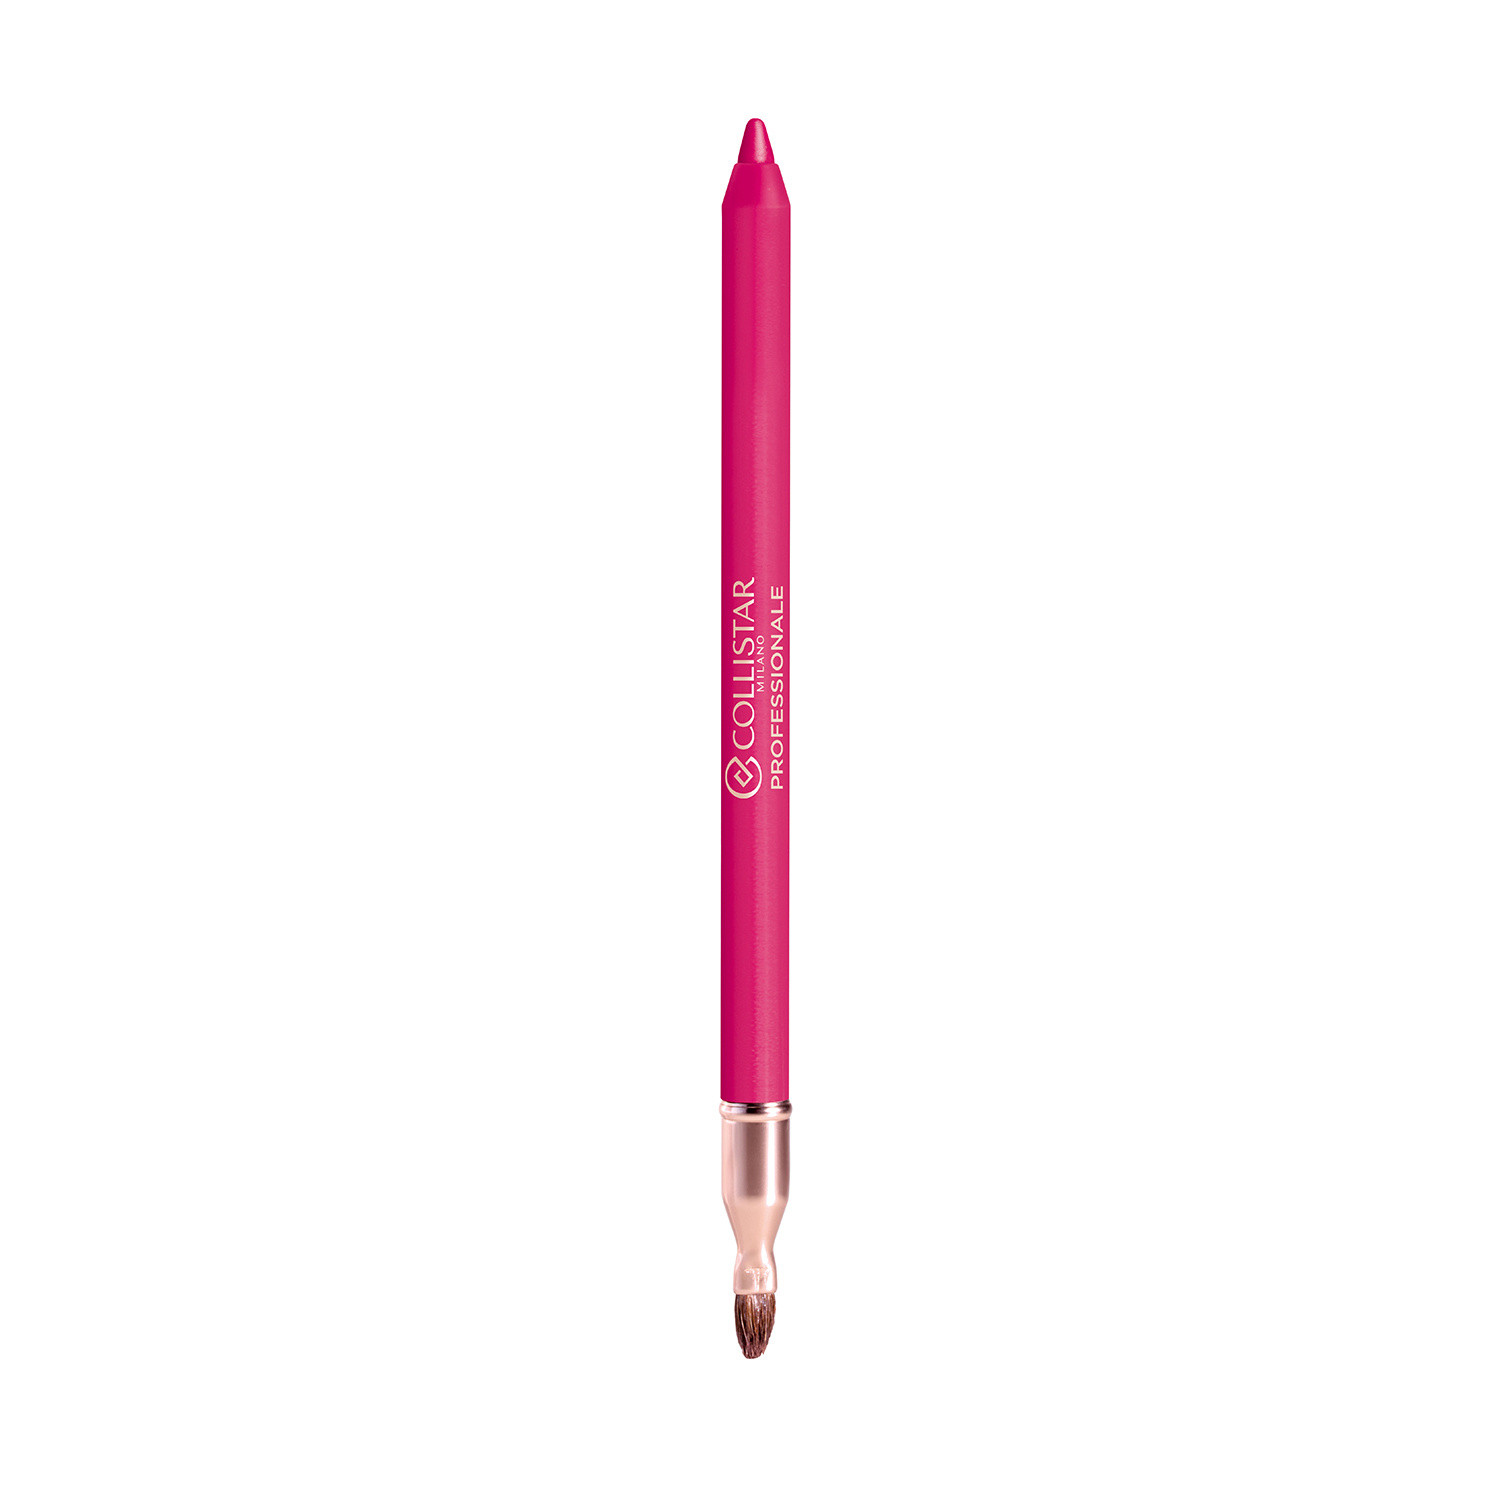 Collistar - Professionale matita labbra lunga durata - 103 Fucsia Petunia, Rosa fuxia, large image number 1